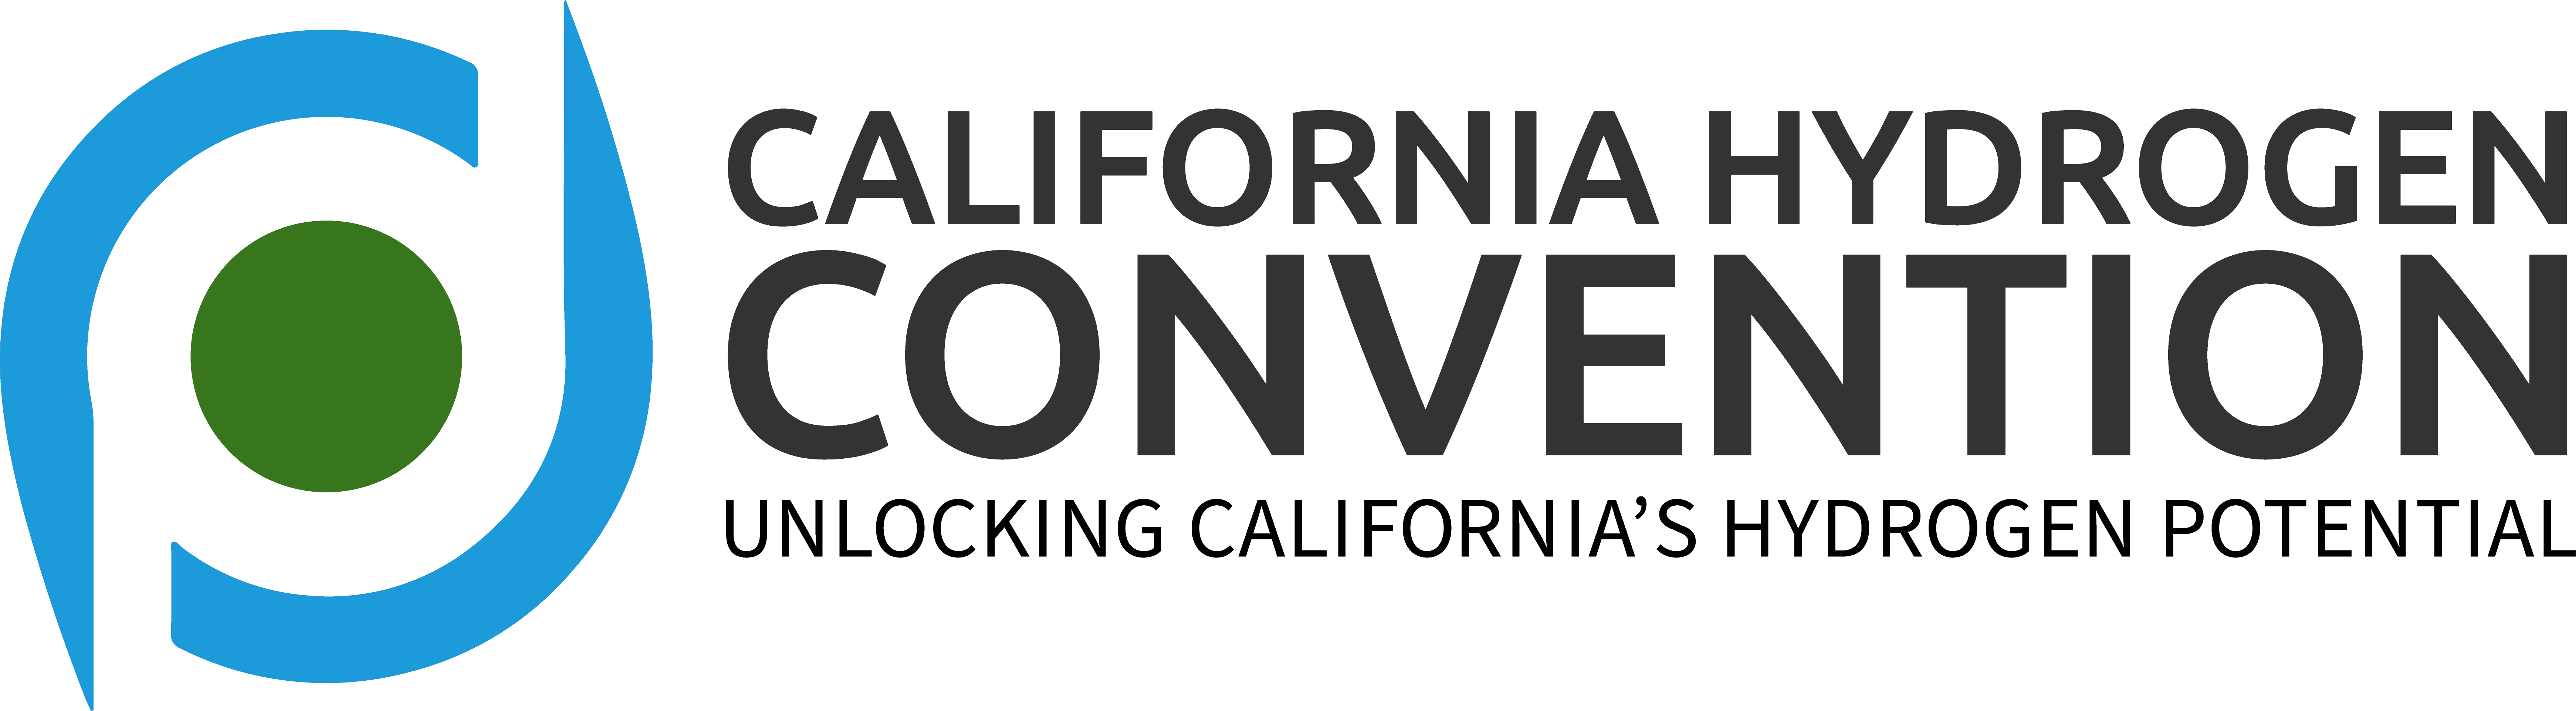 CALIFORNIA HYDROGEN CONVENTION